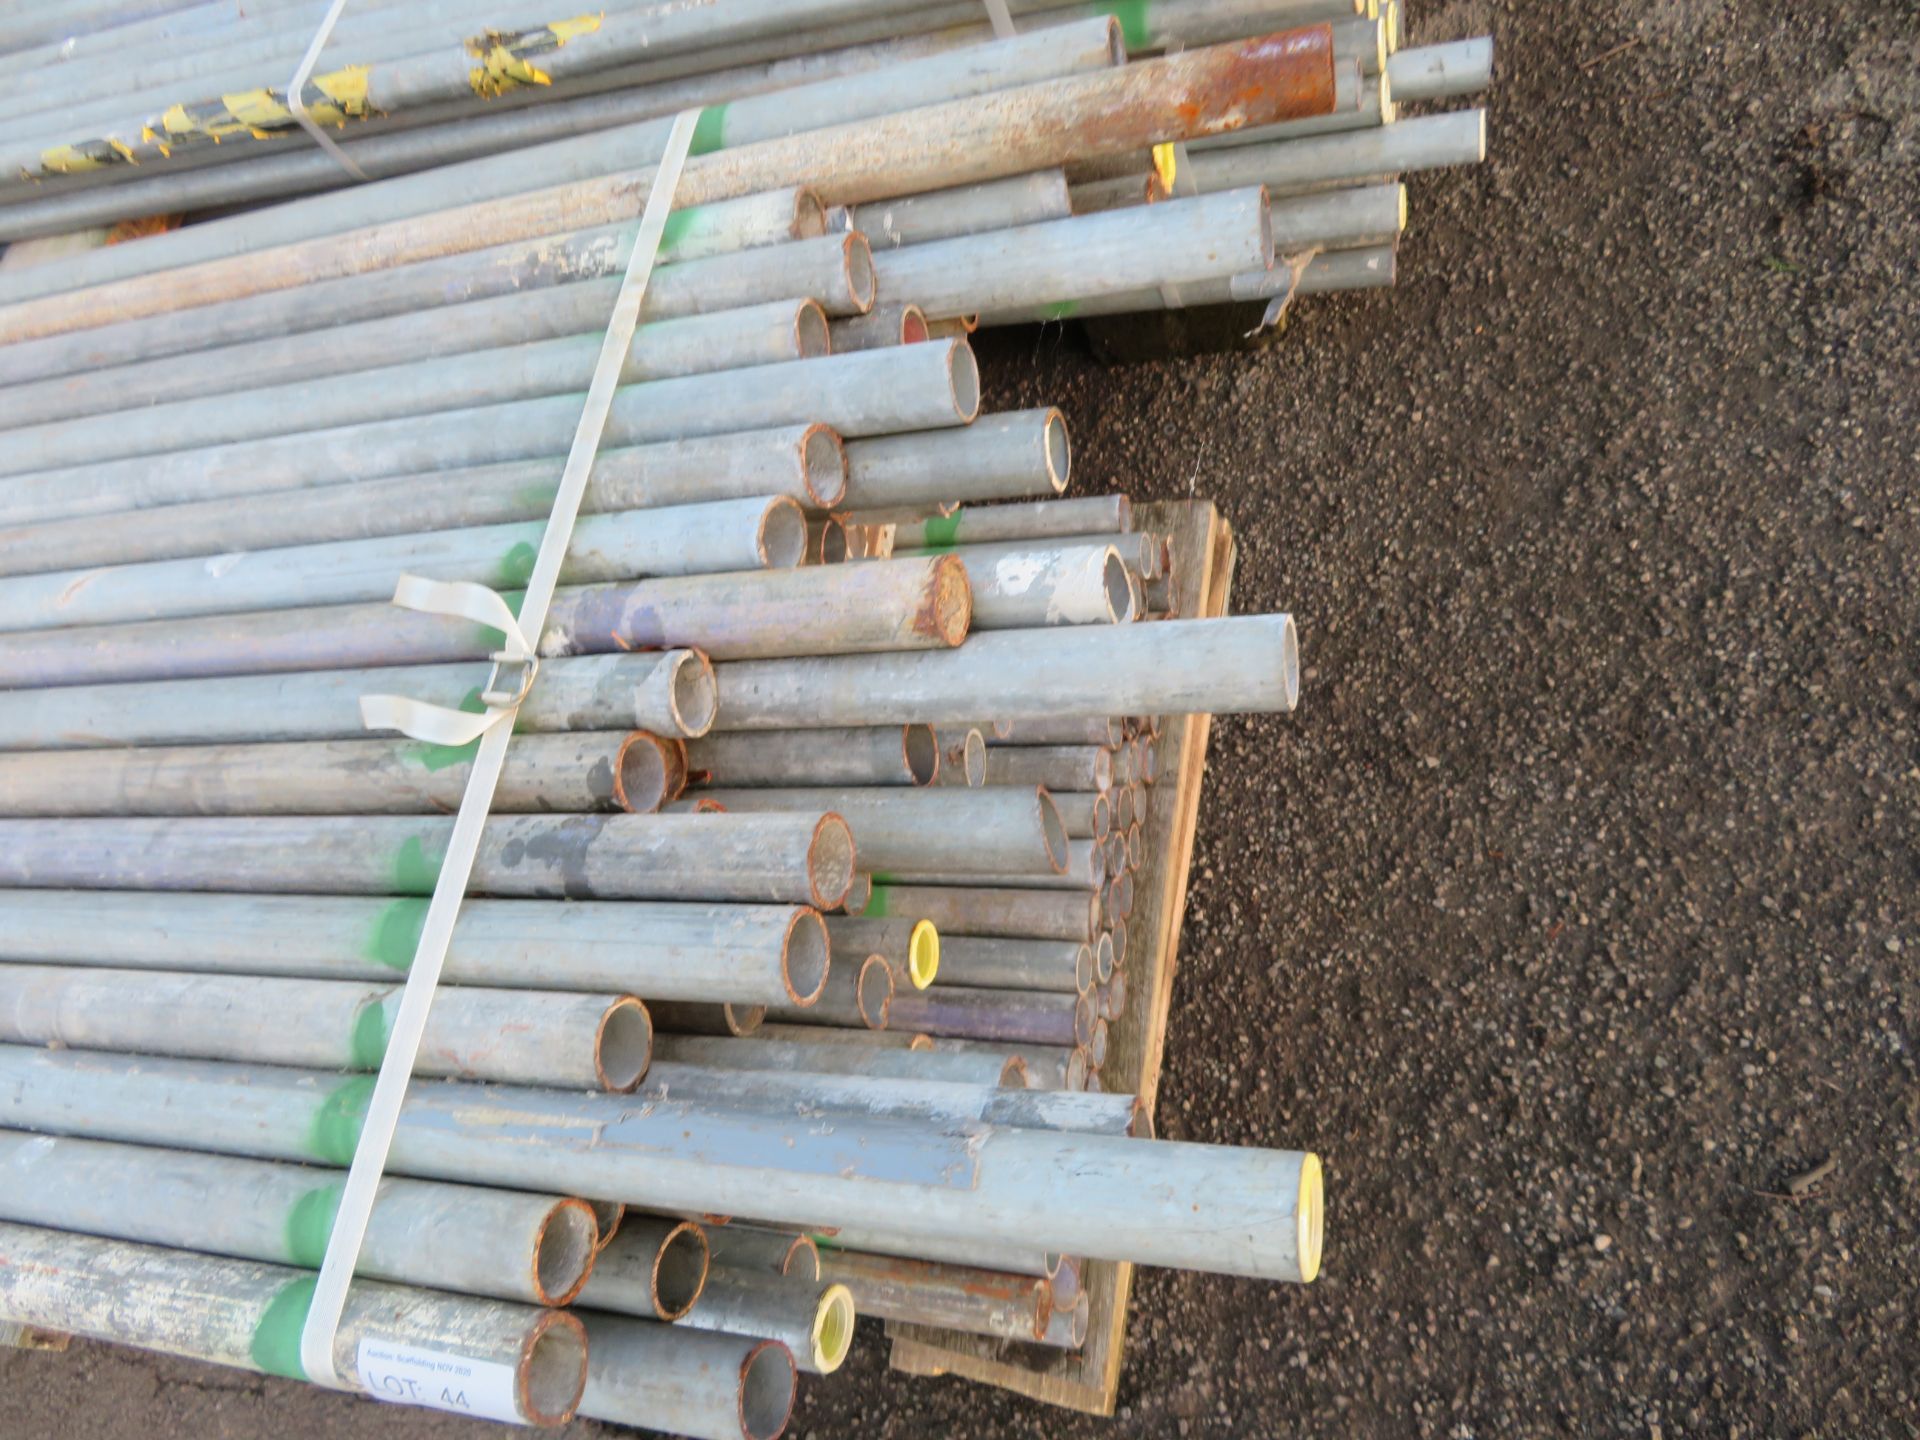 200x Various Length Galvanised Steel Scaffolding Poles. Lengths Range Between 7.5ft - 5ft. - Image 4 of 5